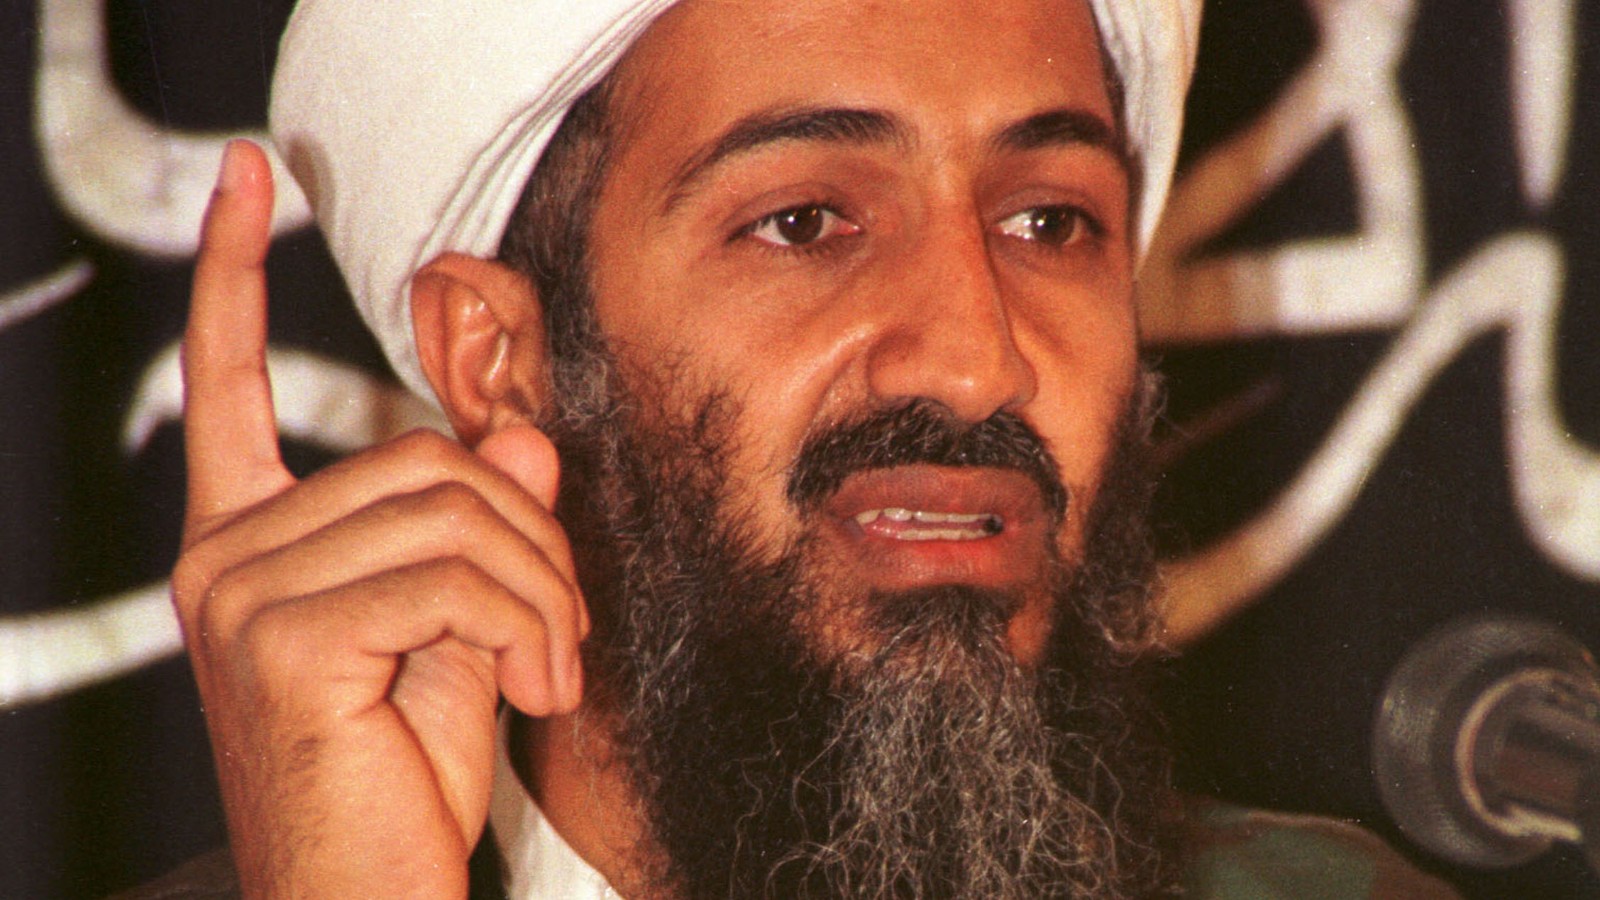 Bin Ladens Mother Breaks Her Long Silence Cnn